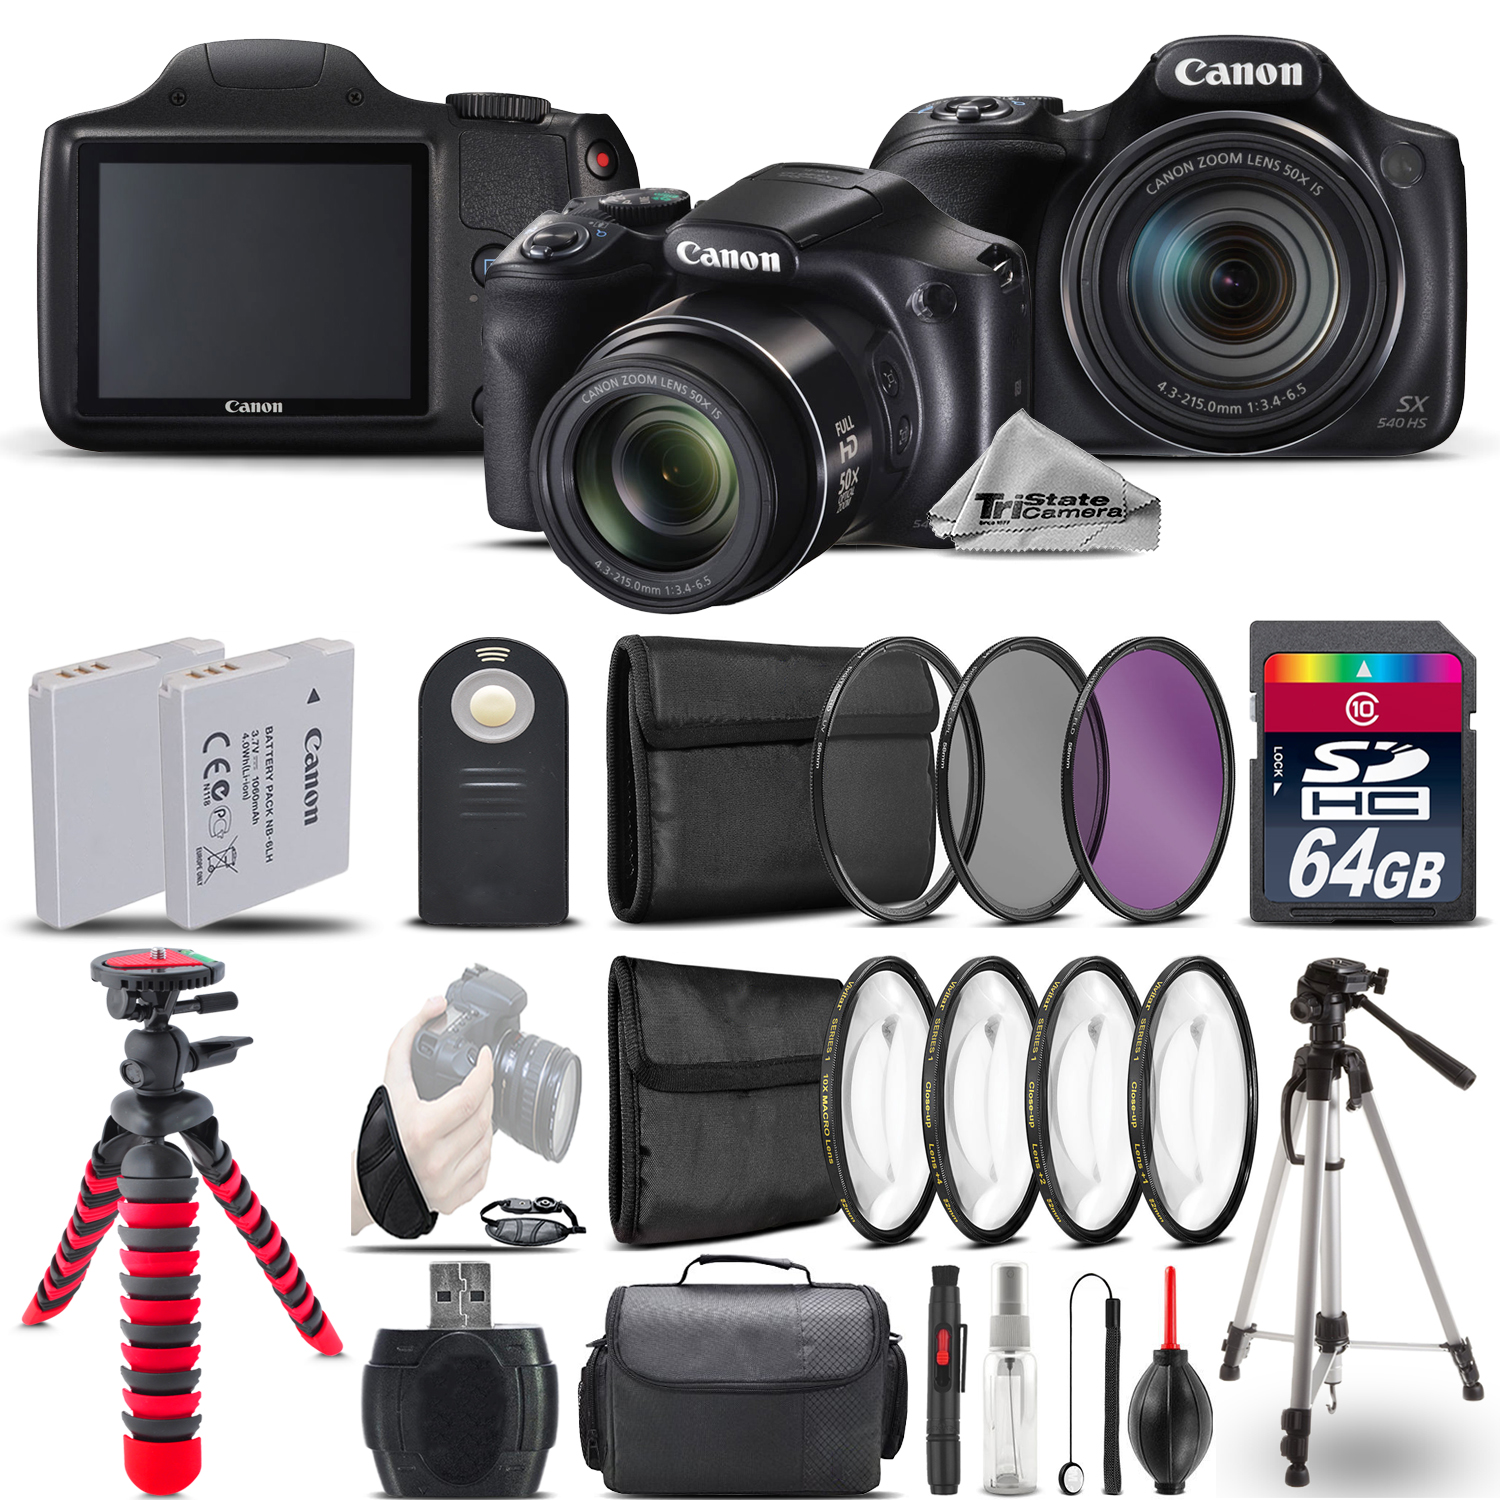 PowerShot SX540 HS Digital Camera + 2 x Tripod  + EXT BAT + Filter - 64GB *FREE SHIPPING*